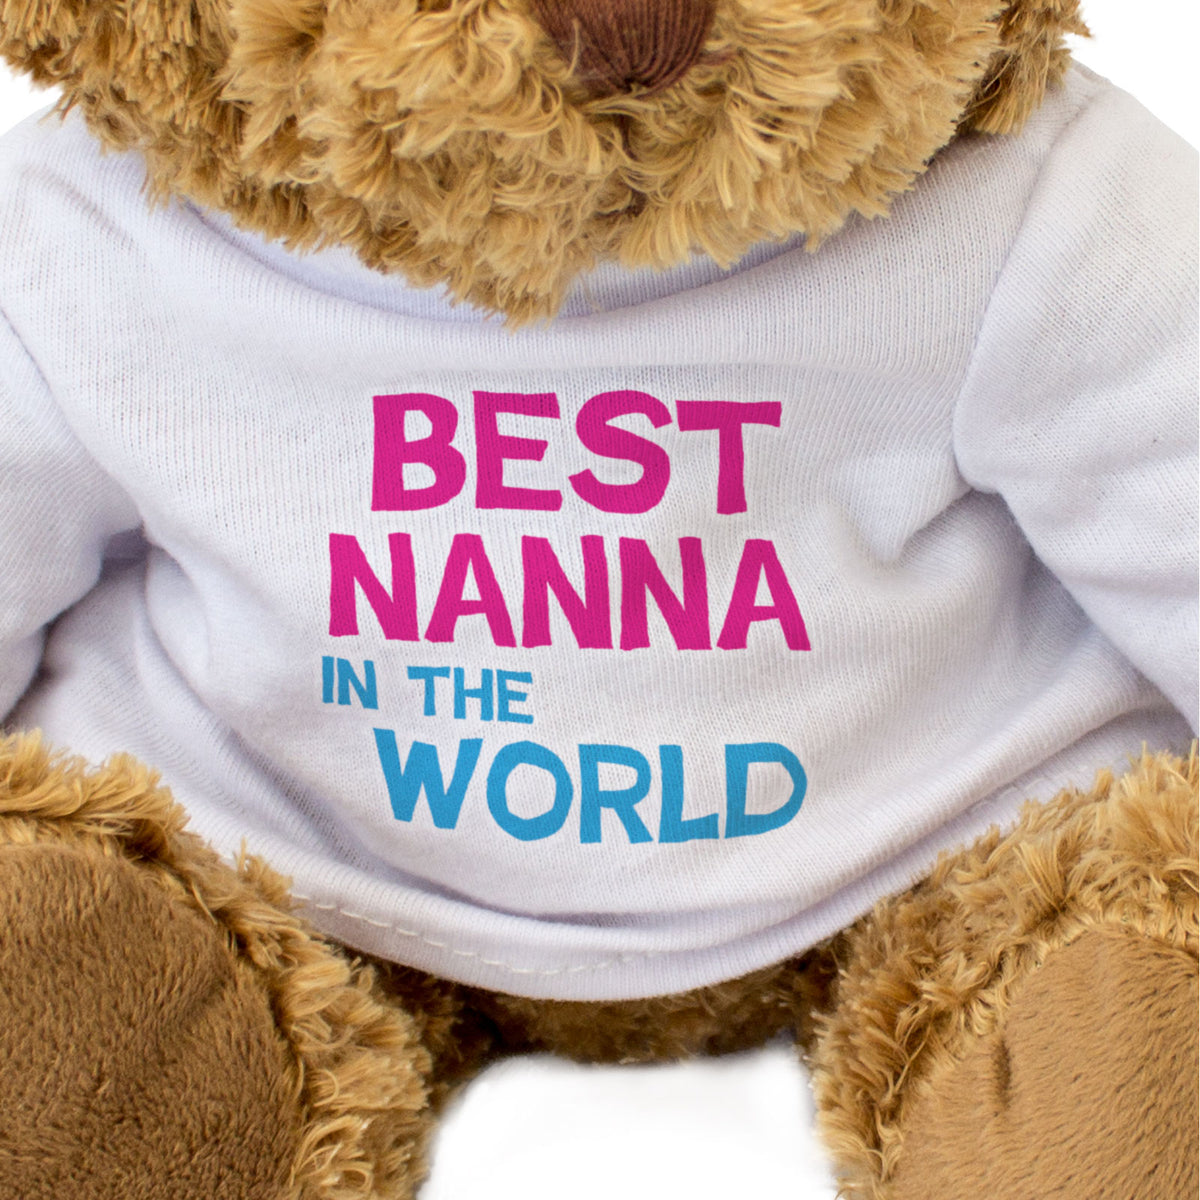 Best Nanna In The World - Teddy Bear - Gift Present